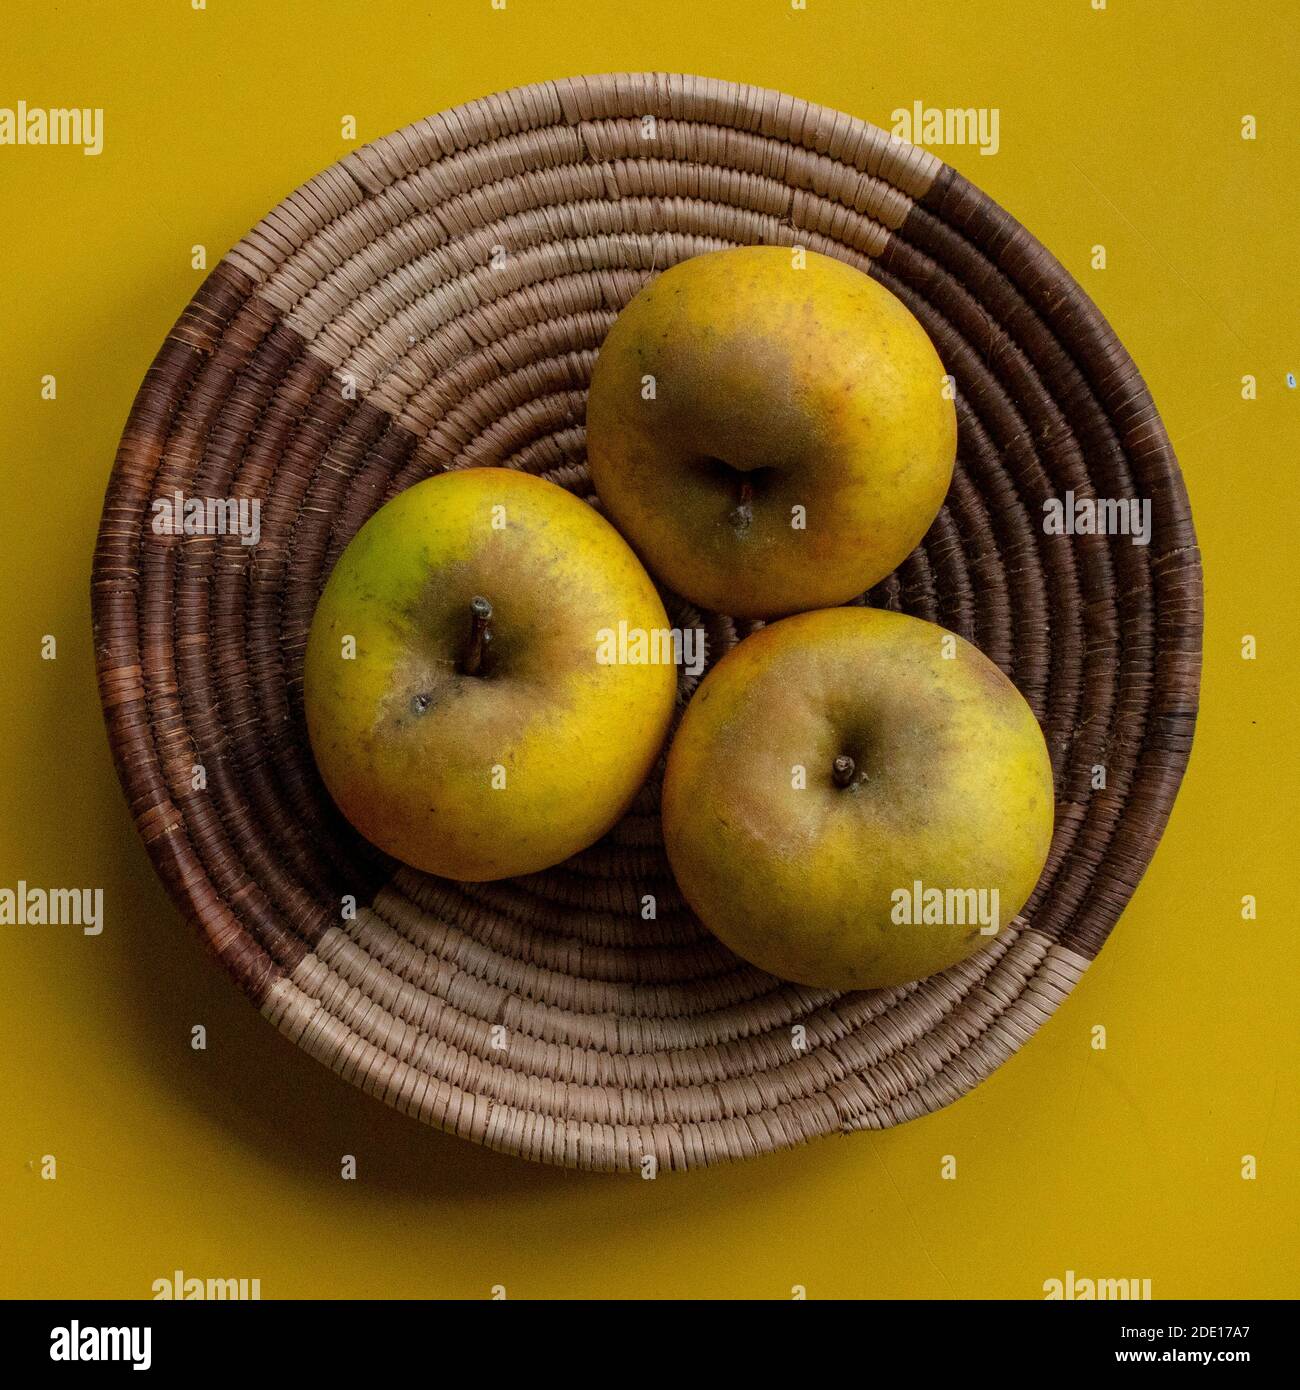 Orleans Reinette apples on wicker basket Stock Photo